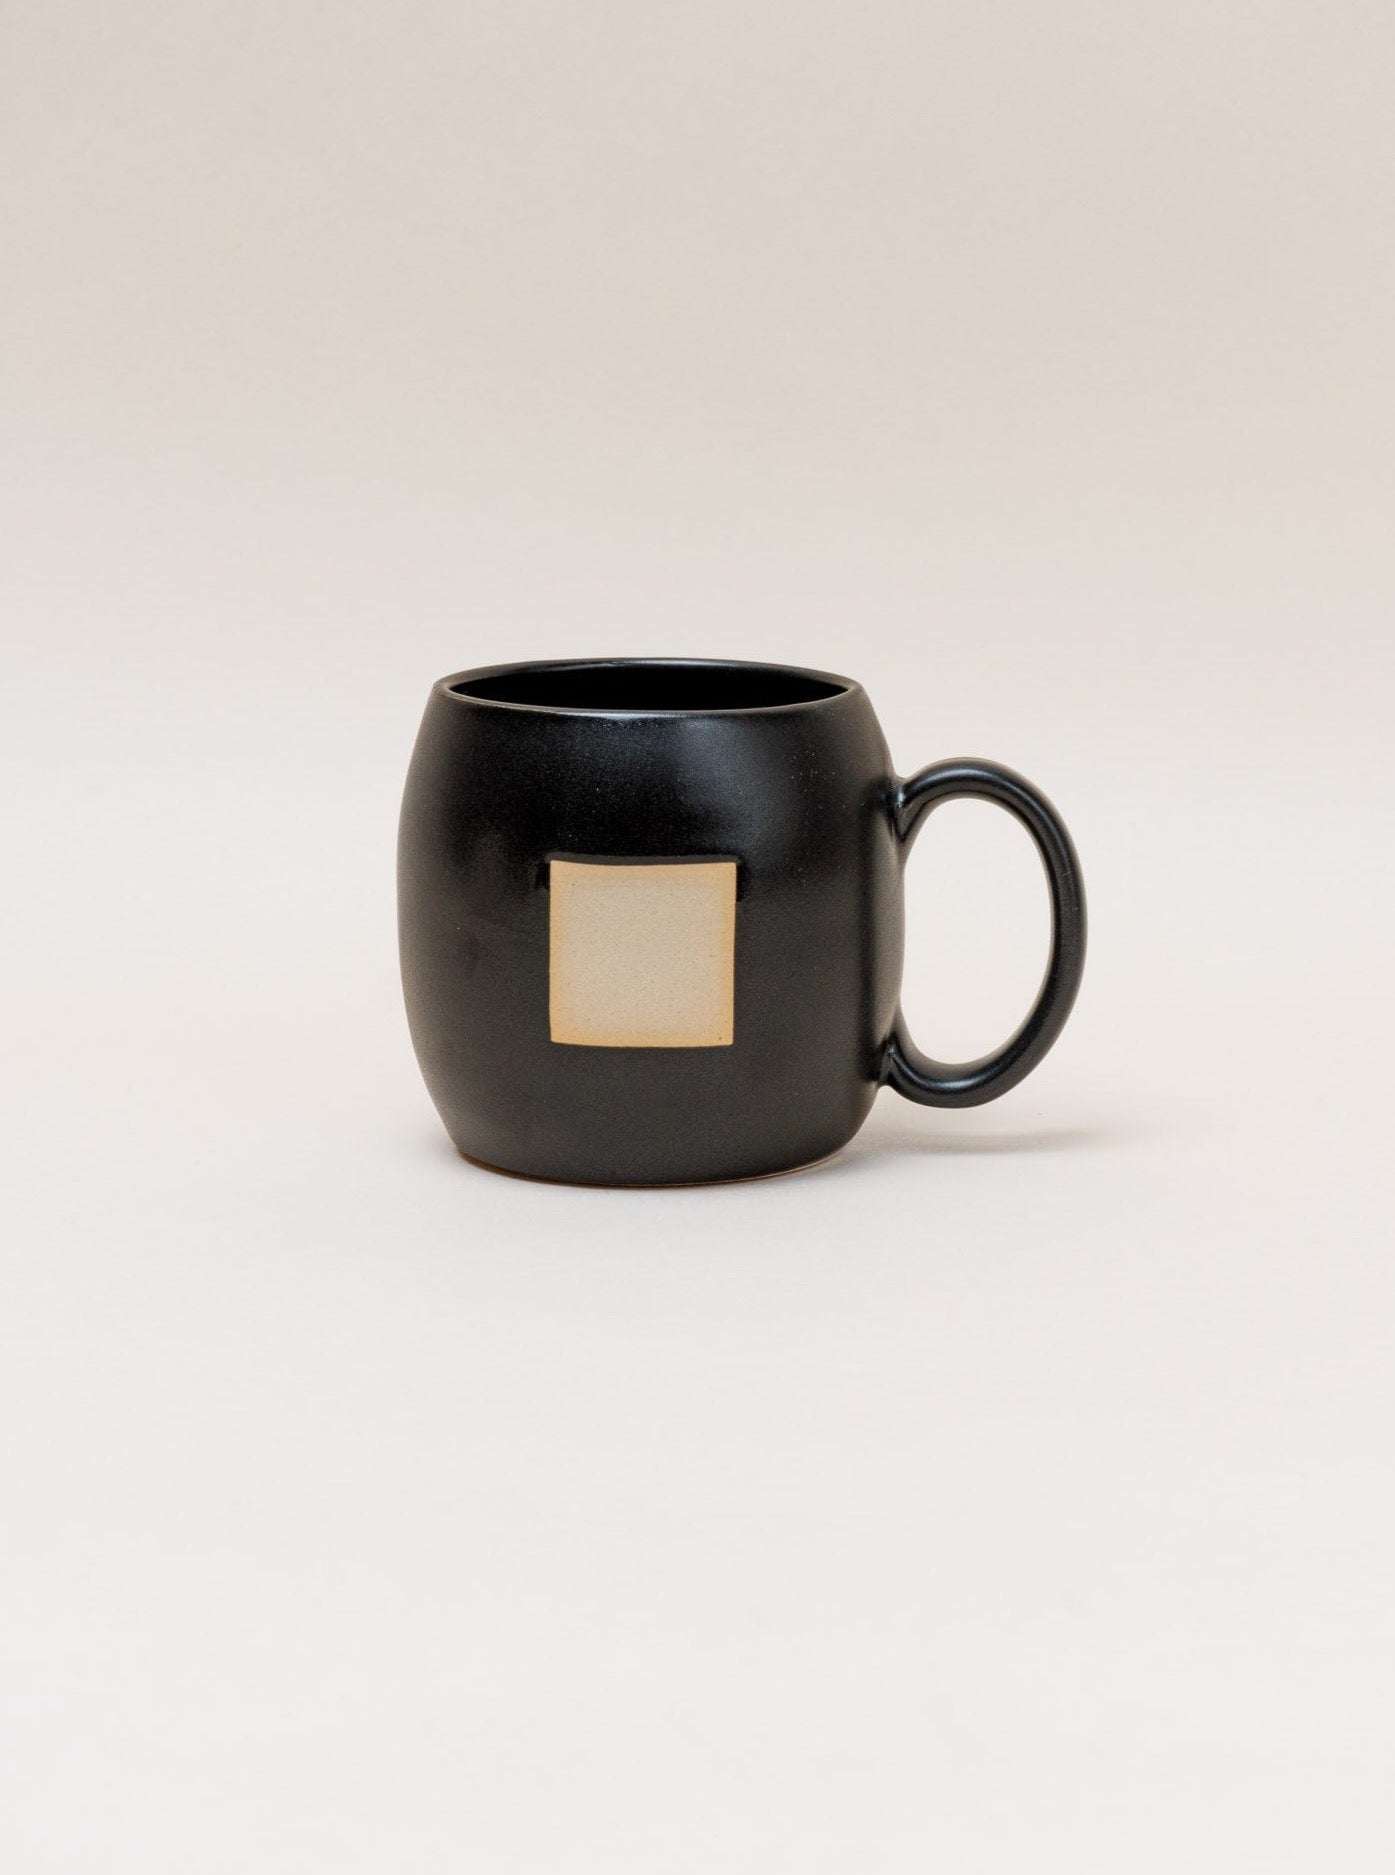 A Negative Space Mug - Black with a minimalist design featuring a gold square.